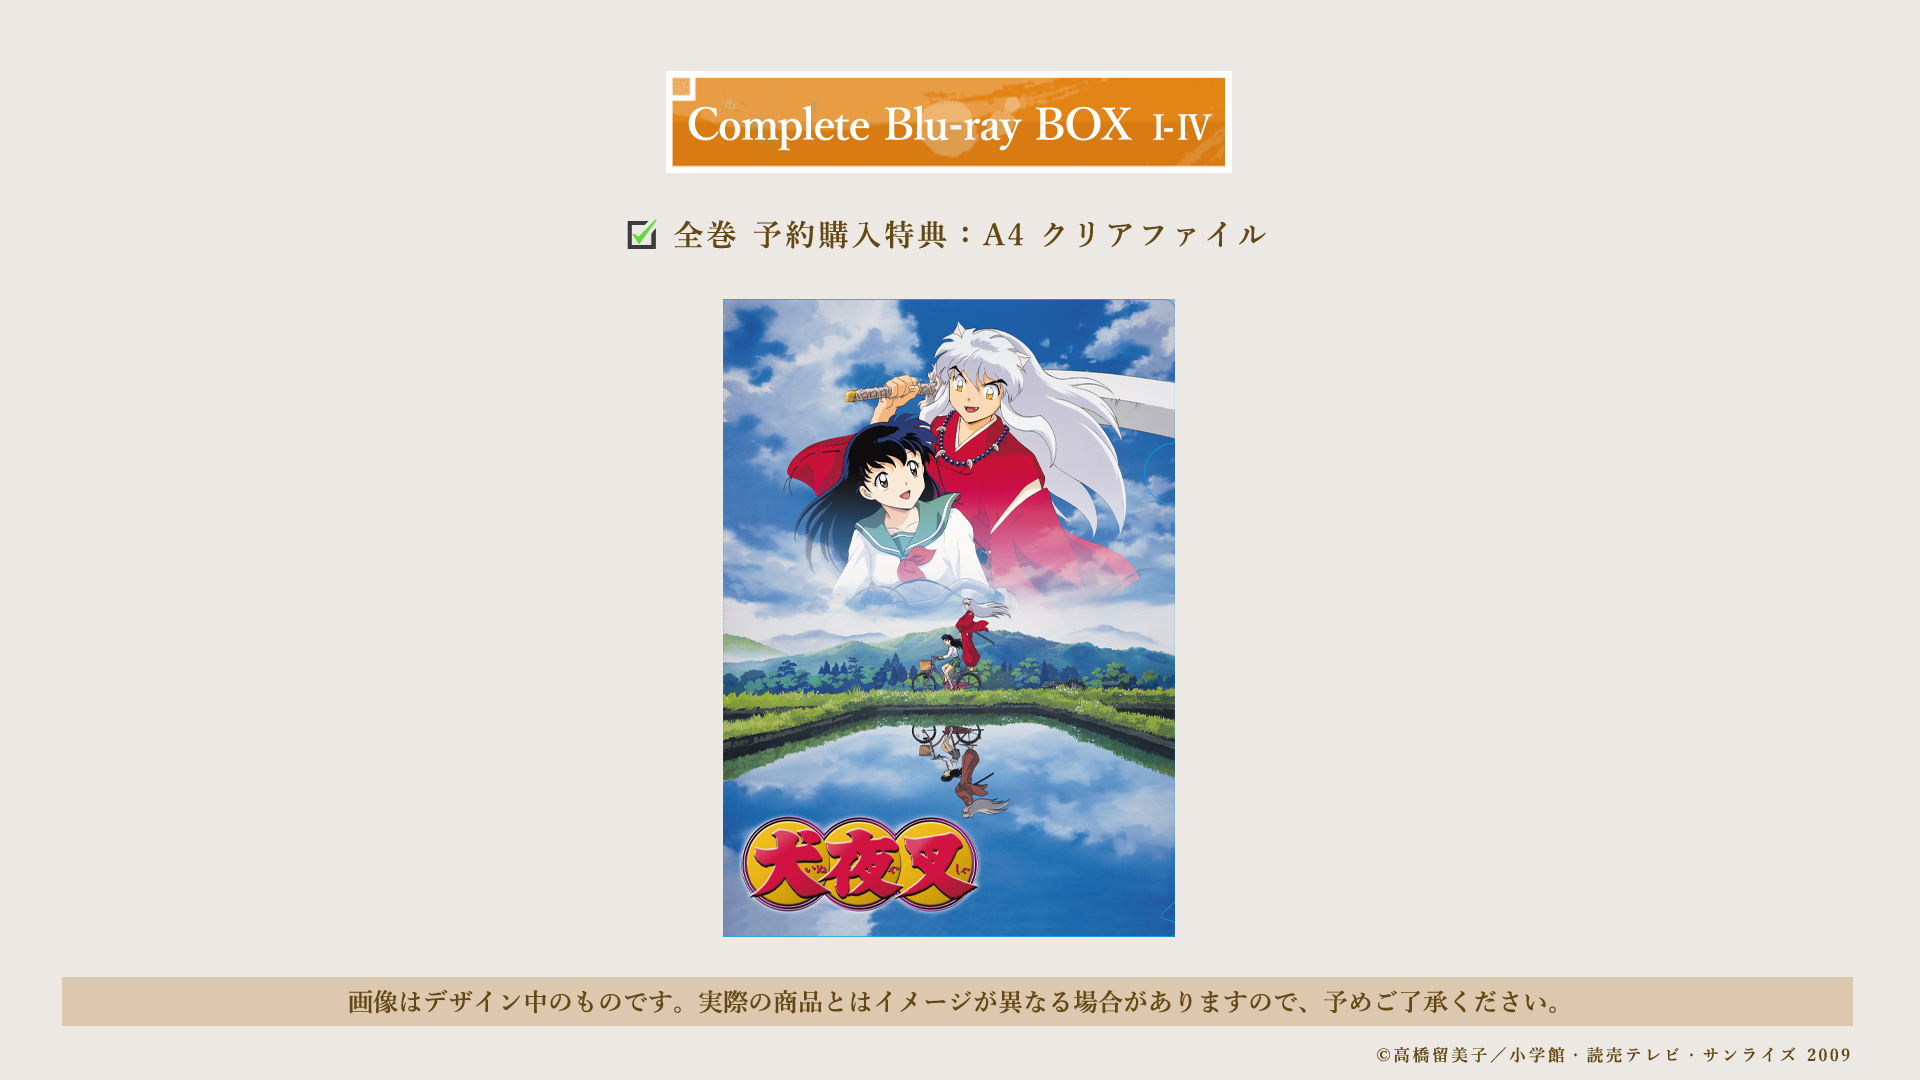 BOX1 出会い編 | 犬夜叉 Complete Blu-ray BOXシリーズ